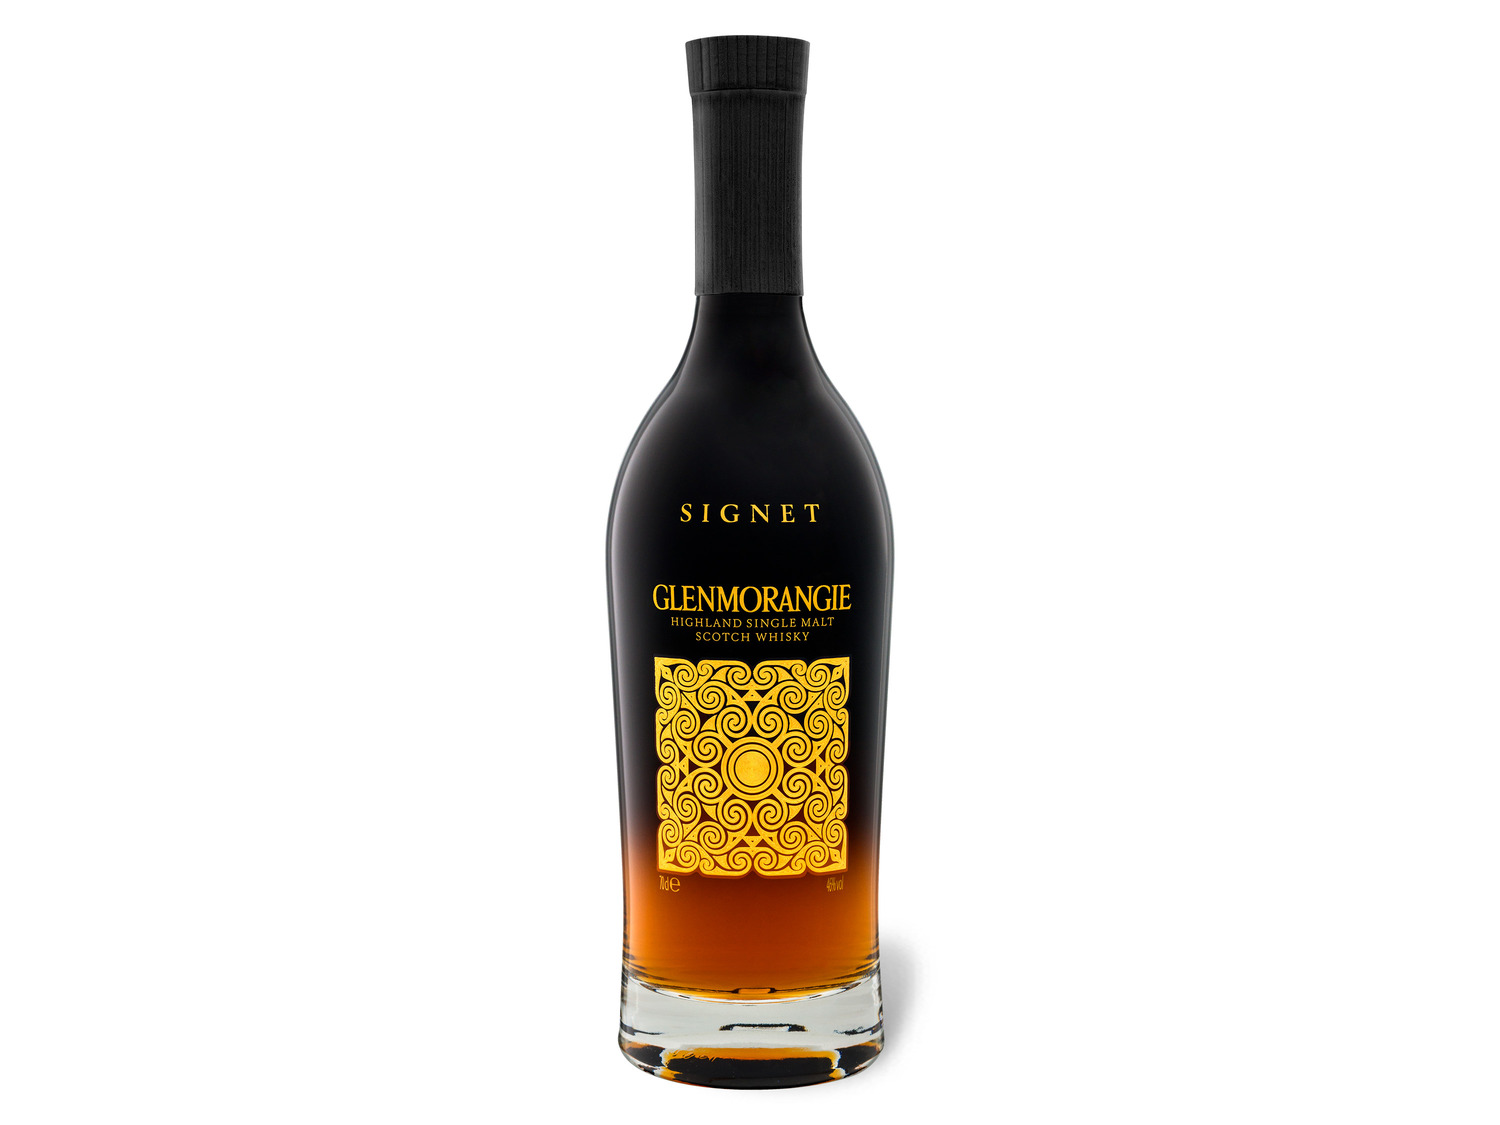 Scotch Glenmorangie Signet Highland Malt Whisky… Single